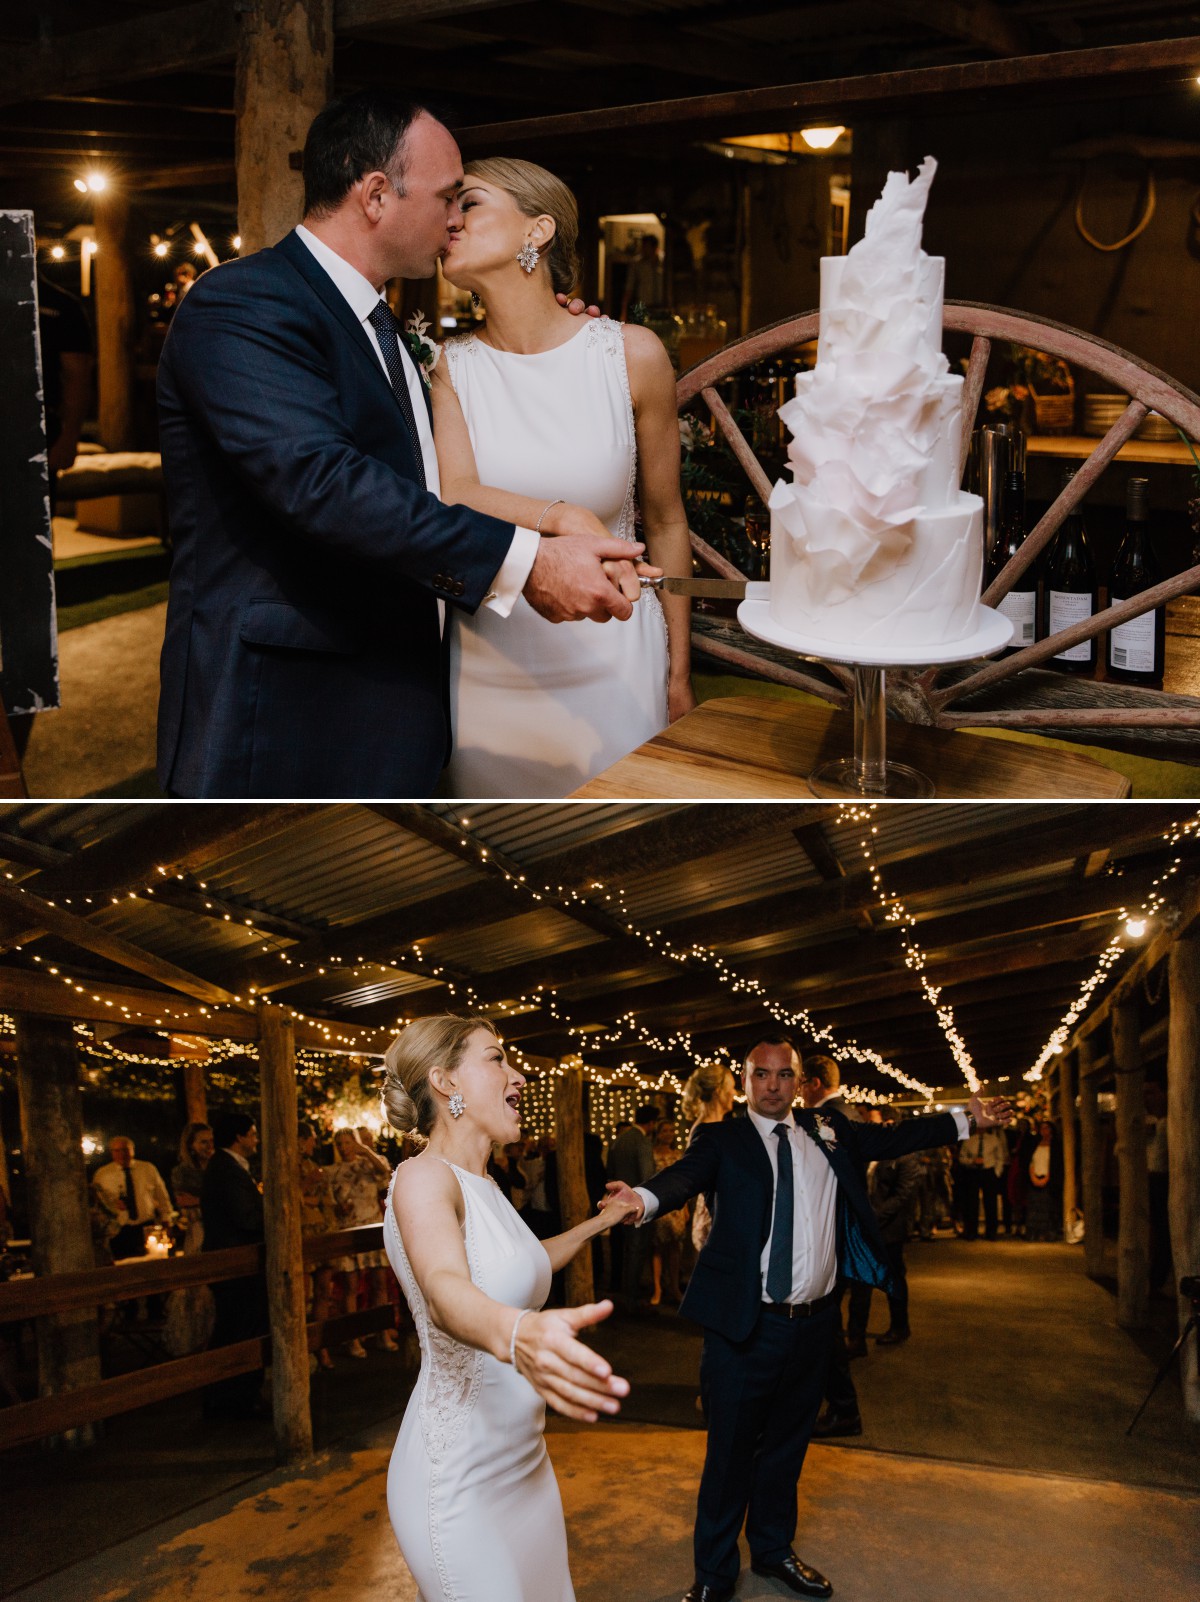 Wedding reception cake cutting and dancing